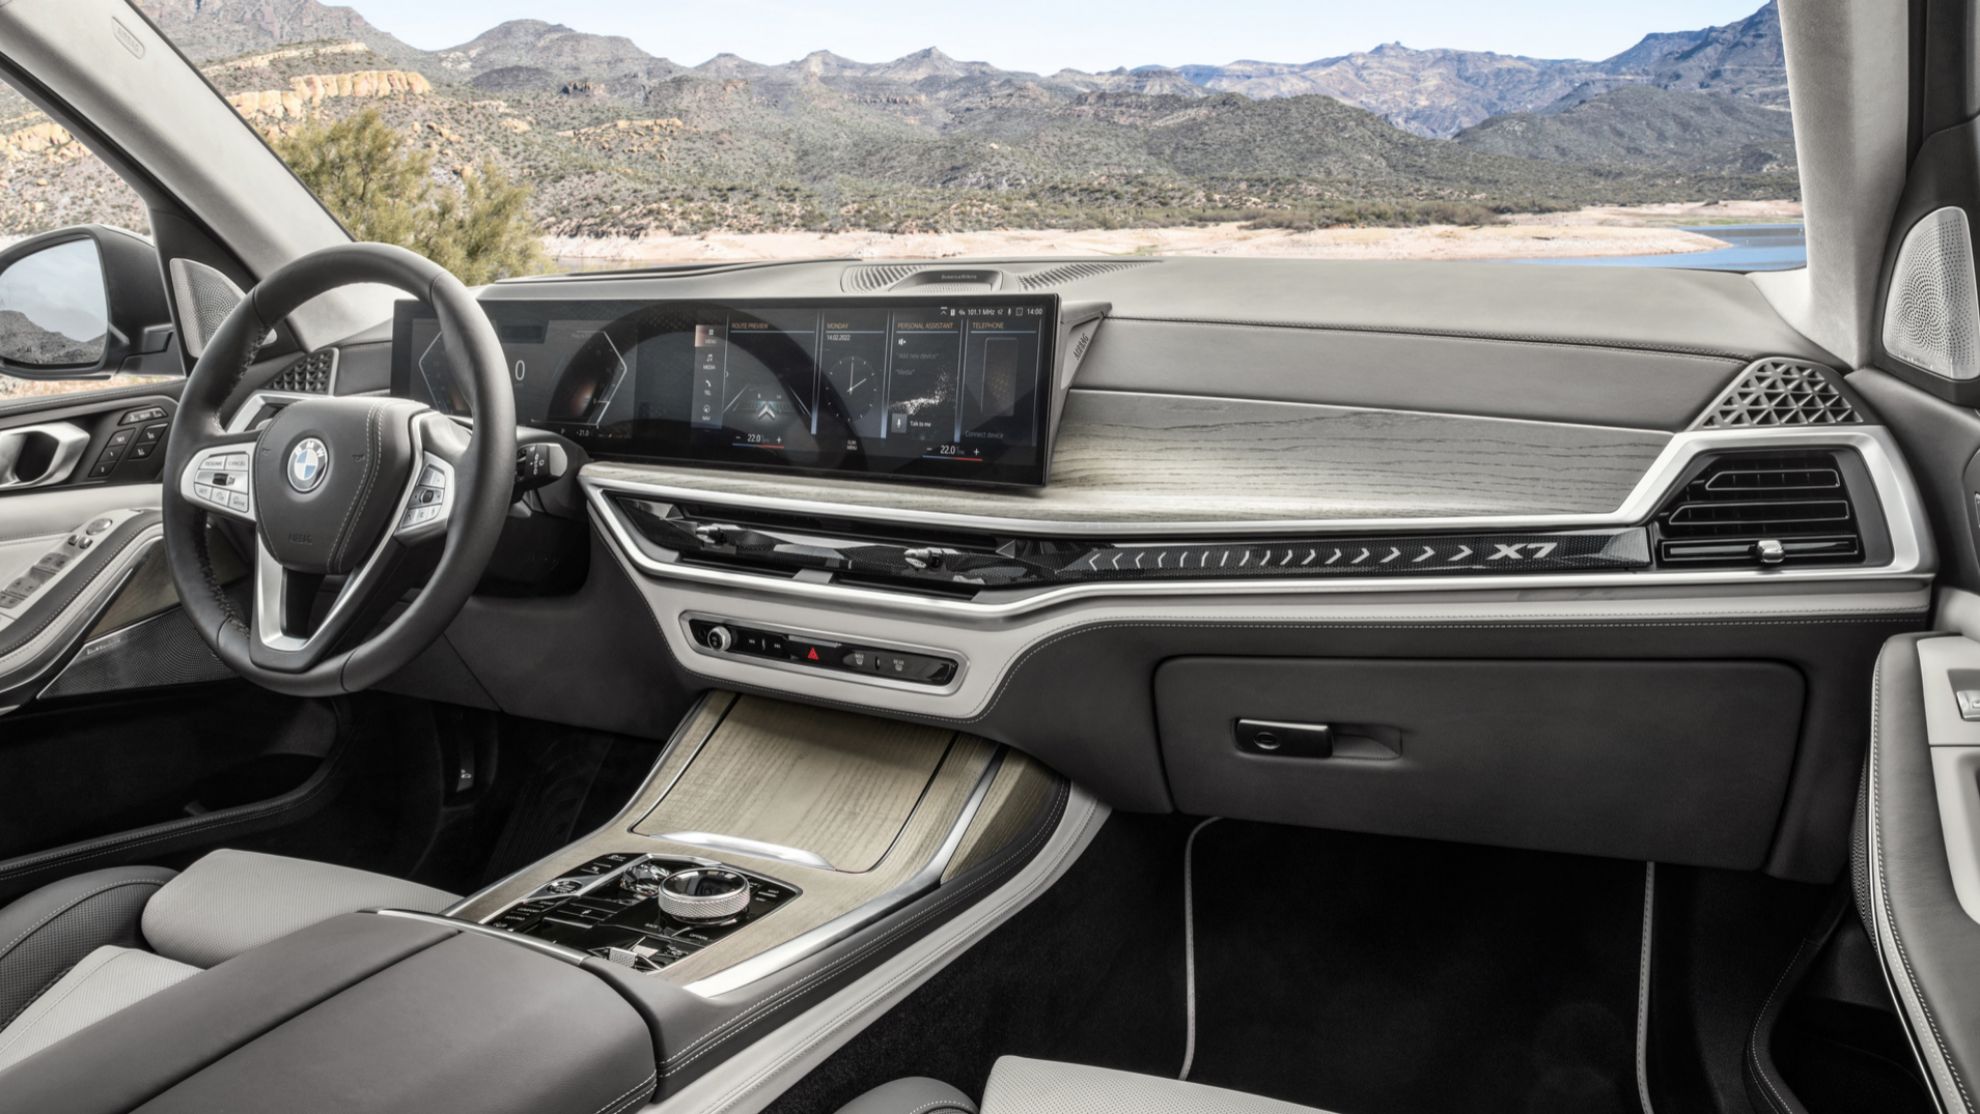 BMW X7 - SUV - restyling - actualizacion - nuevo interior - pantalla curva